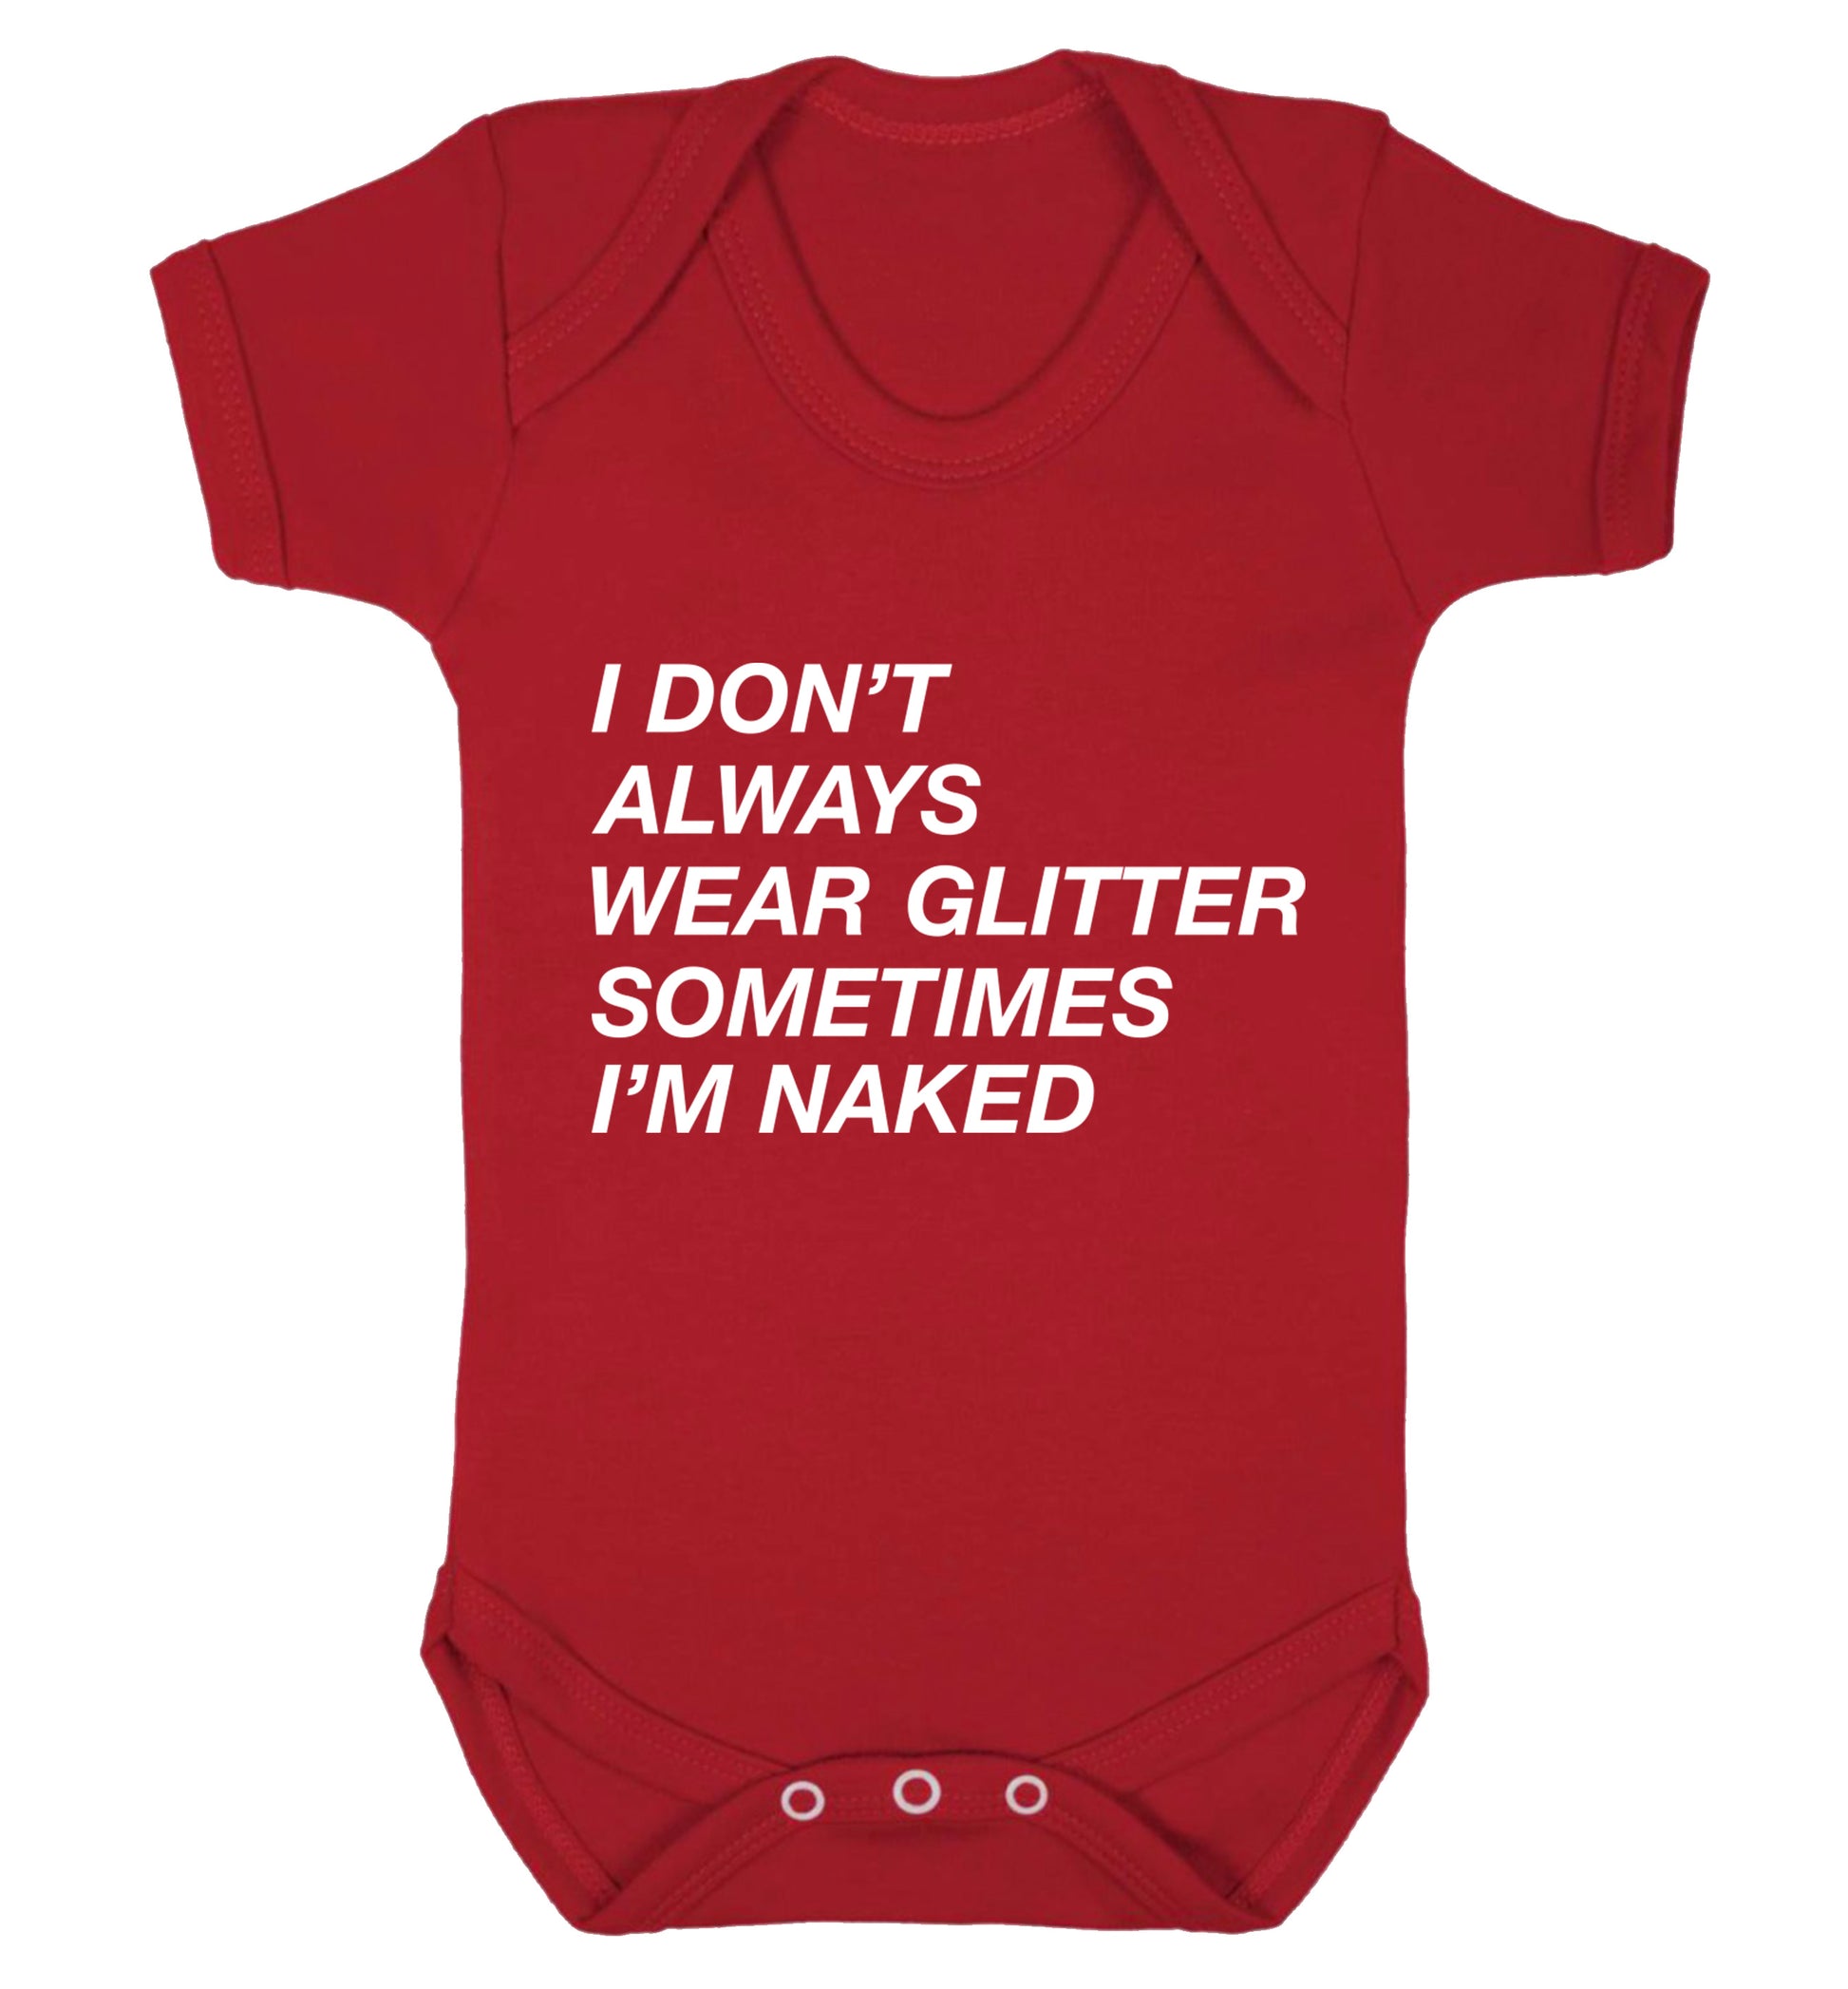 I don't always wear glitter sometimes I'm naked! Baby Vest red 18-24 months